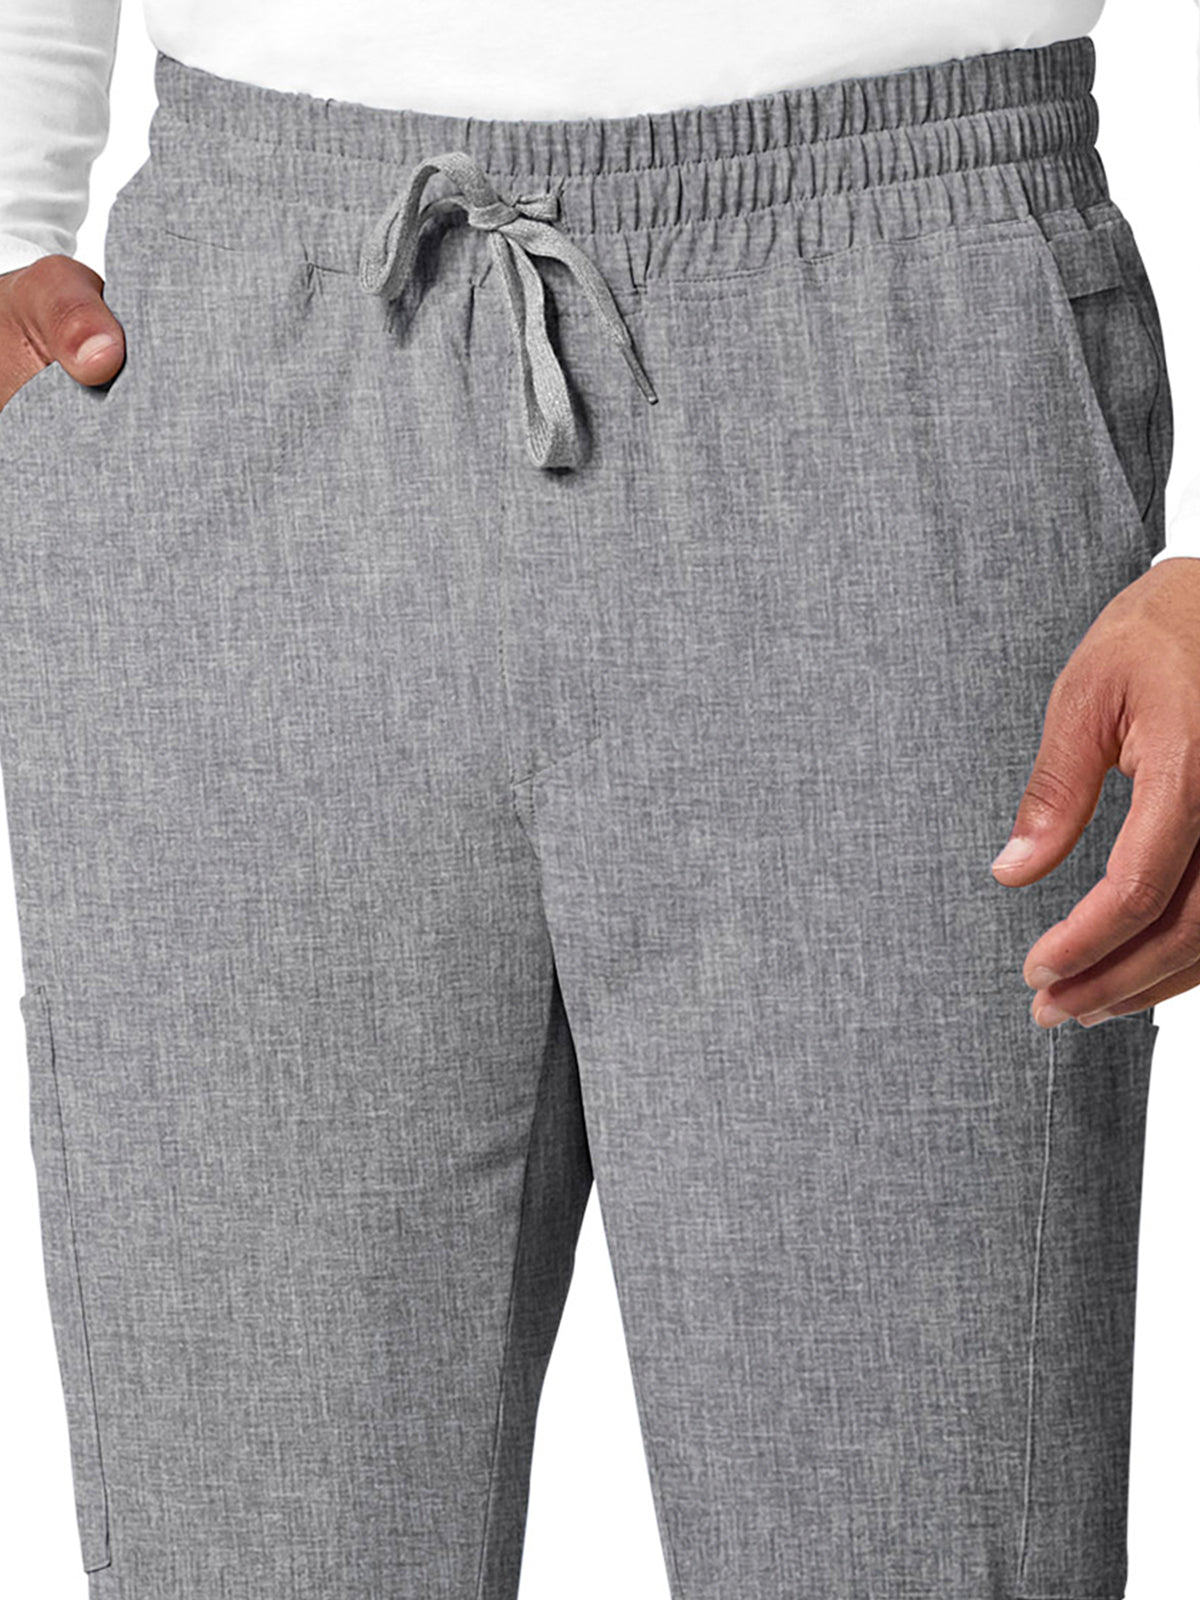 Men's Slim Pant - 5434 - Grey Heather